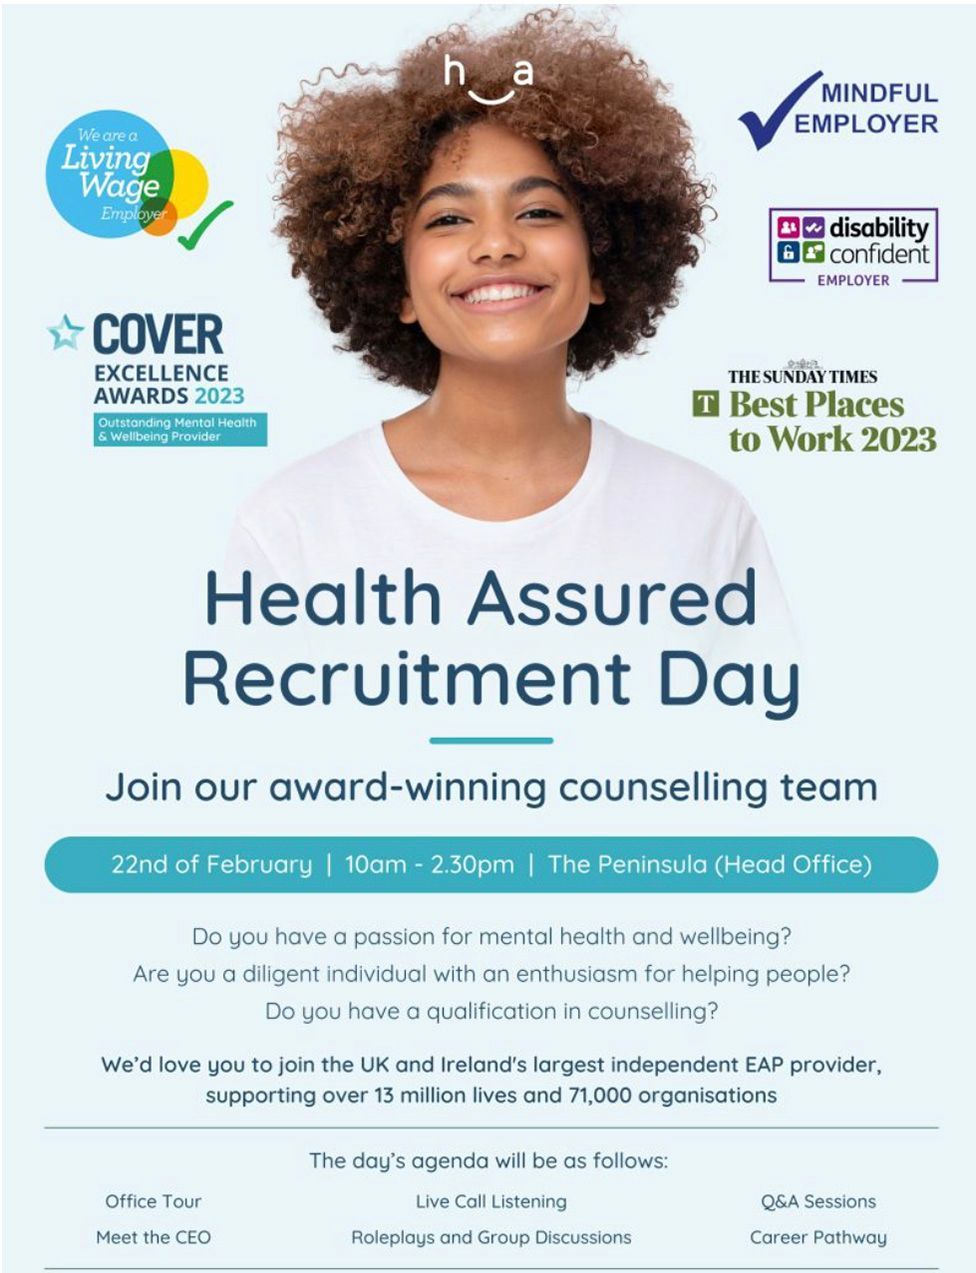 Health Assured Recruitment Day advert